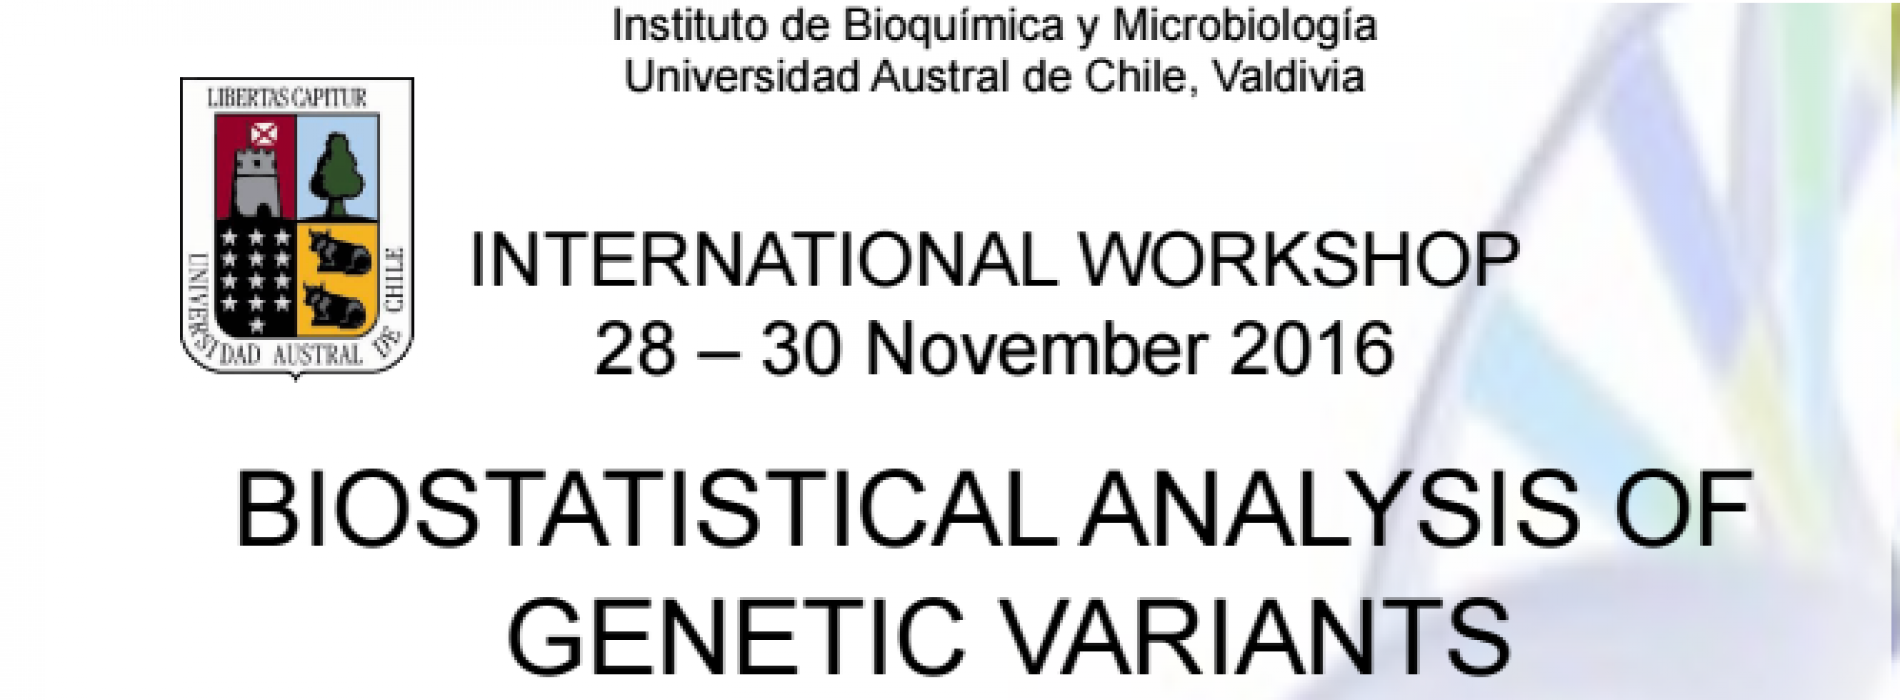 Curso Biostatistical analyses of Genetic Variants. Valdivia